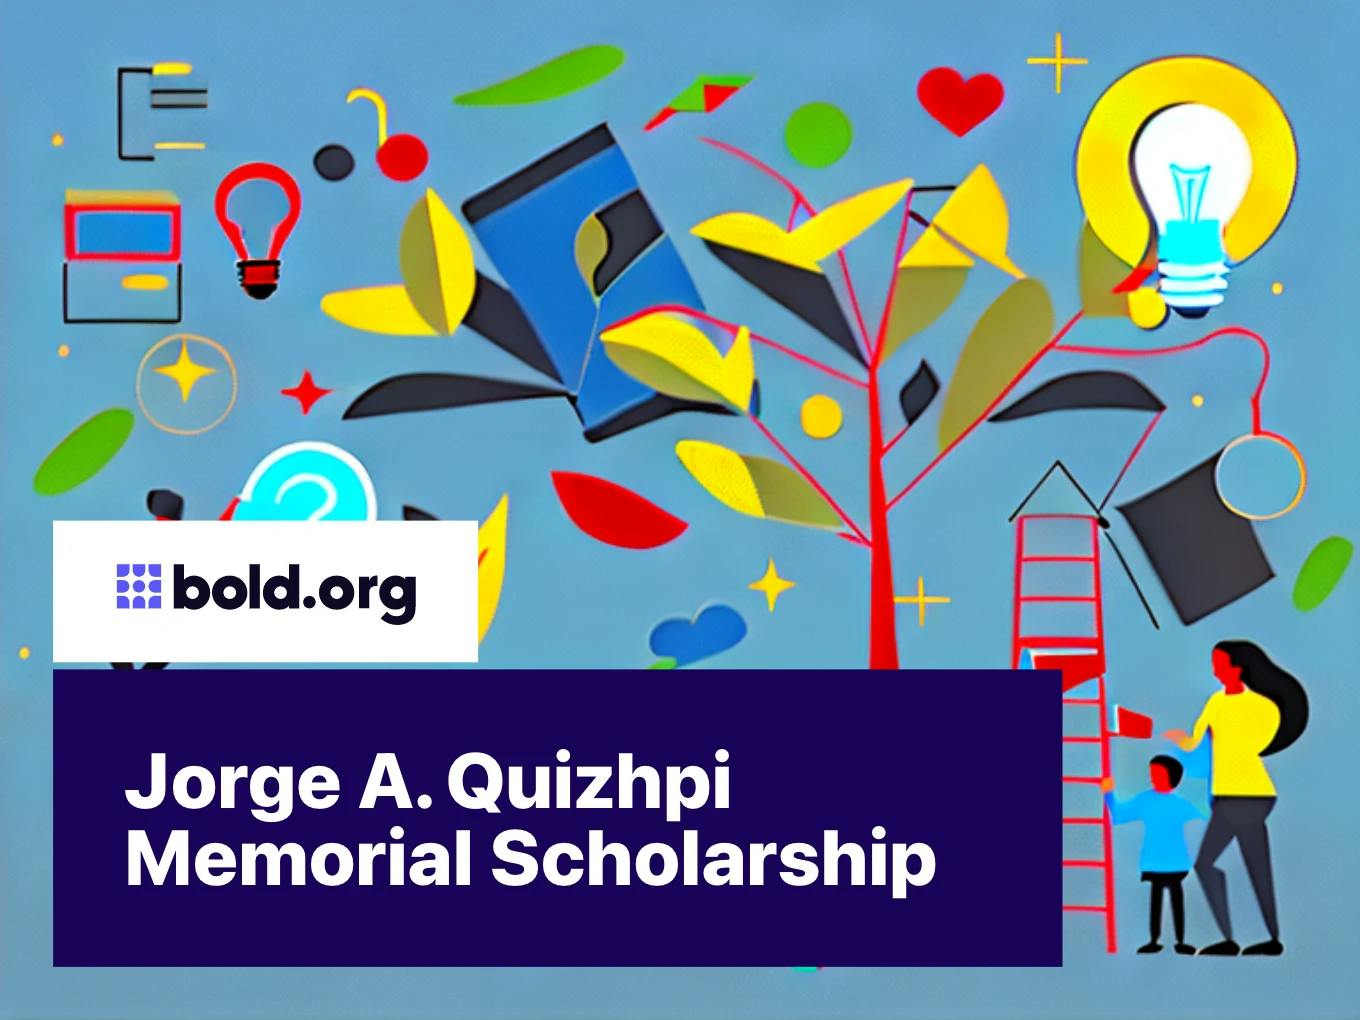 Jorge A. Quizhpi Memorial Scholarship